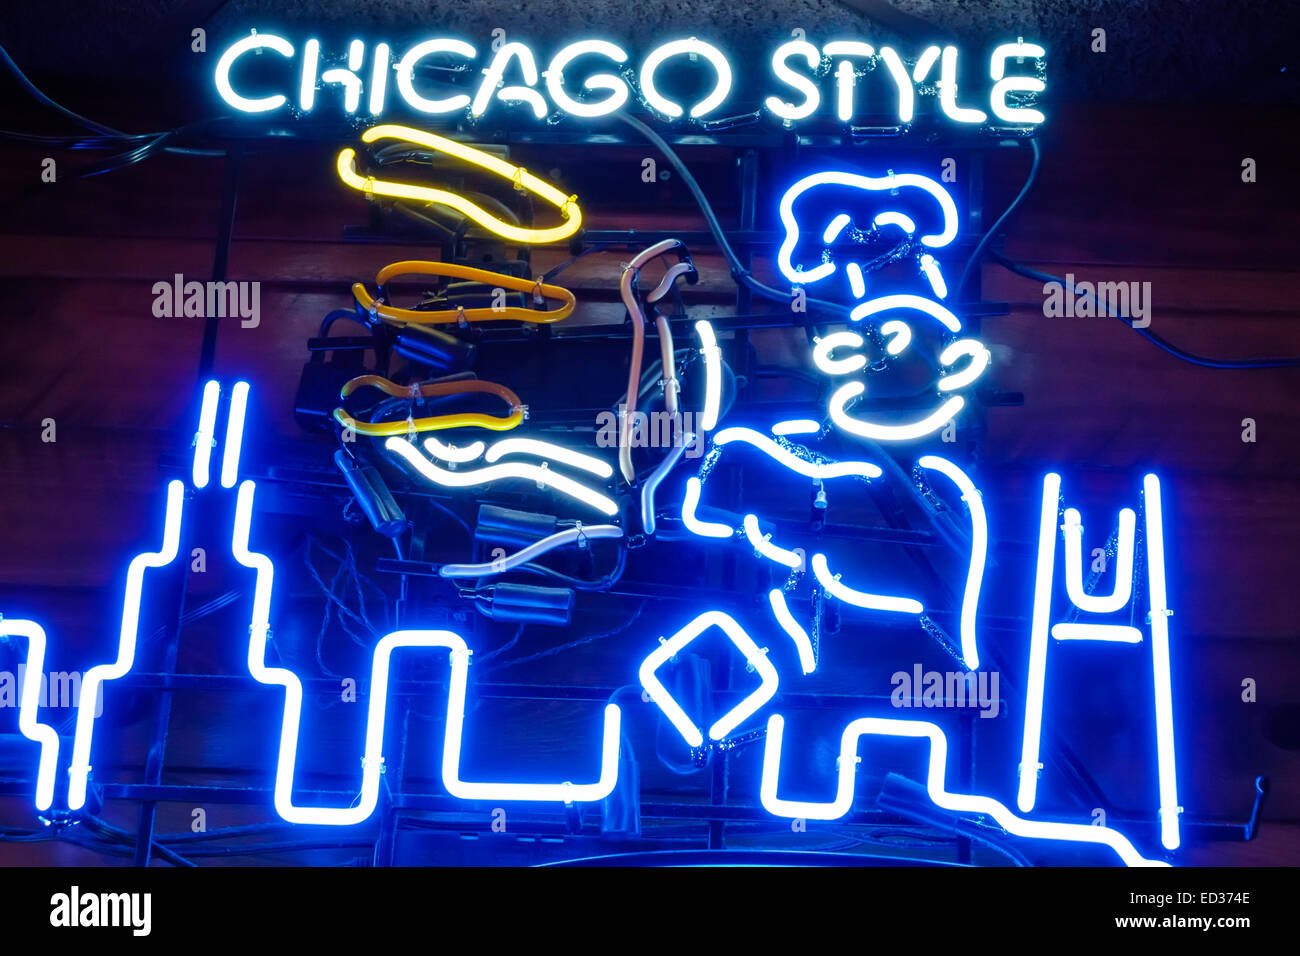 Illinois Urbana-Champaign,Chicago style pizza,neon sign,restaurant restaurants food dining cafe cafes,Italian,IL140904114 Stock Photo